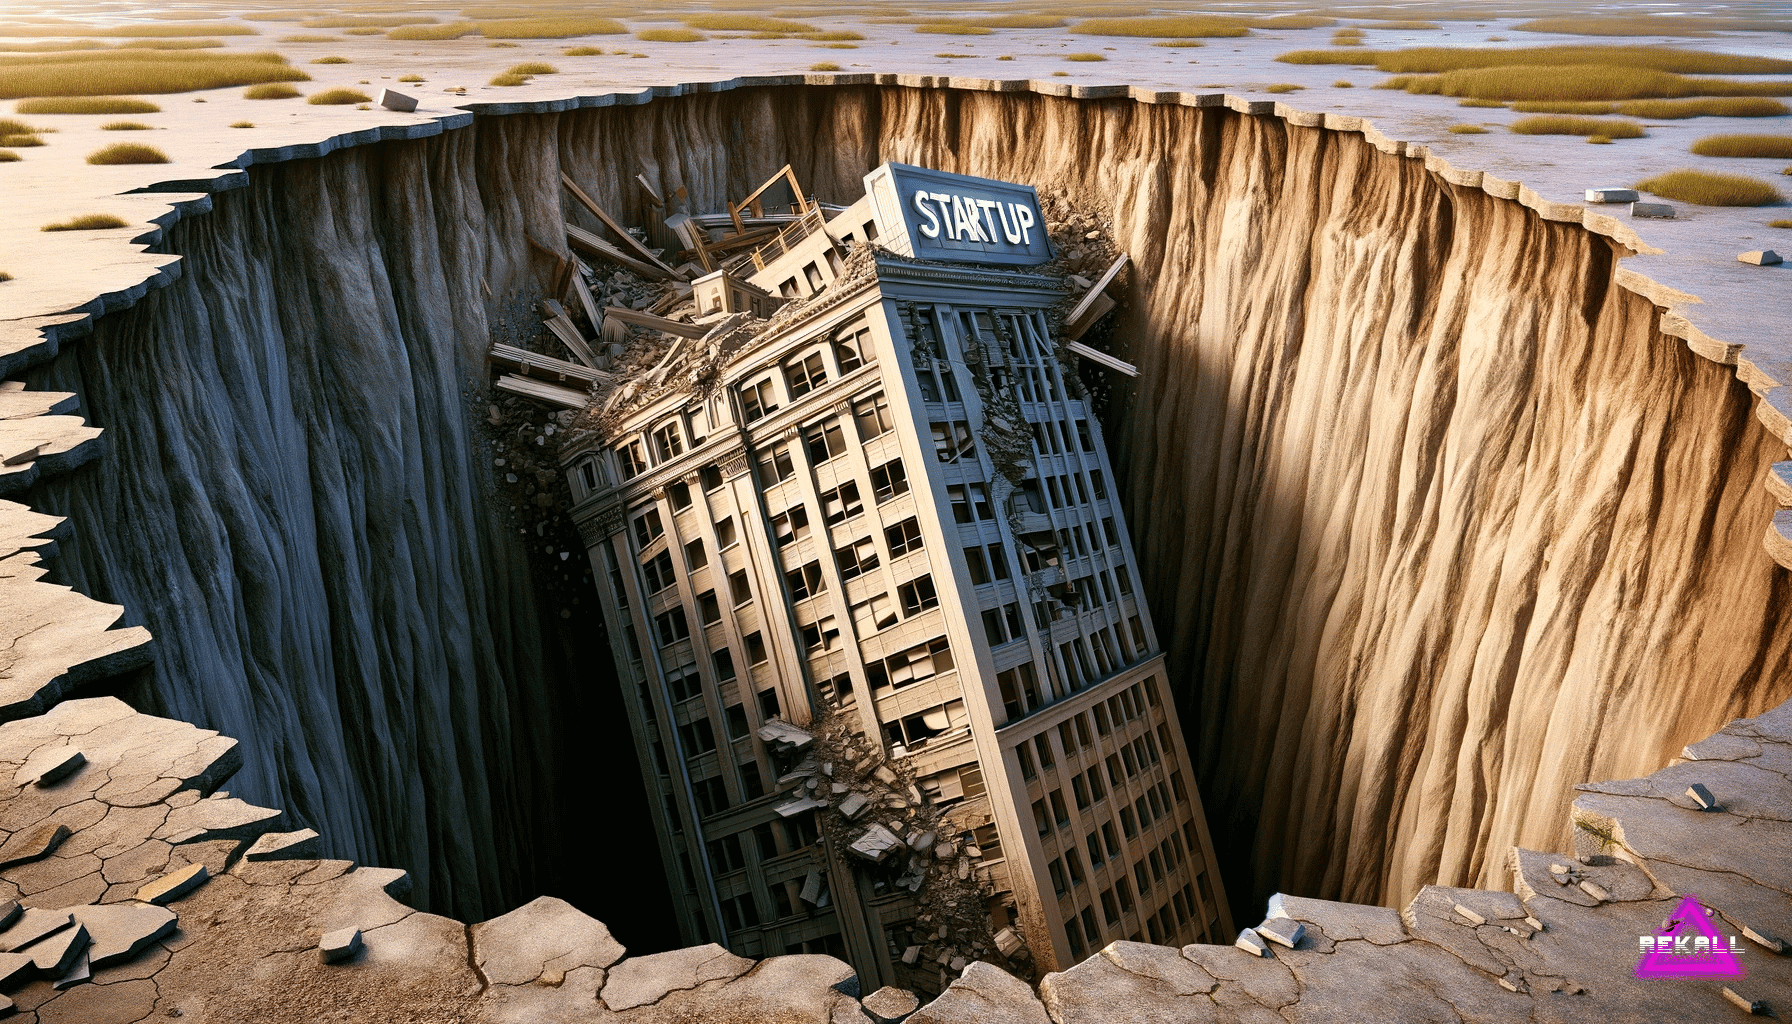 Building in a sinkhole